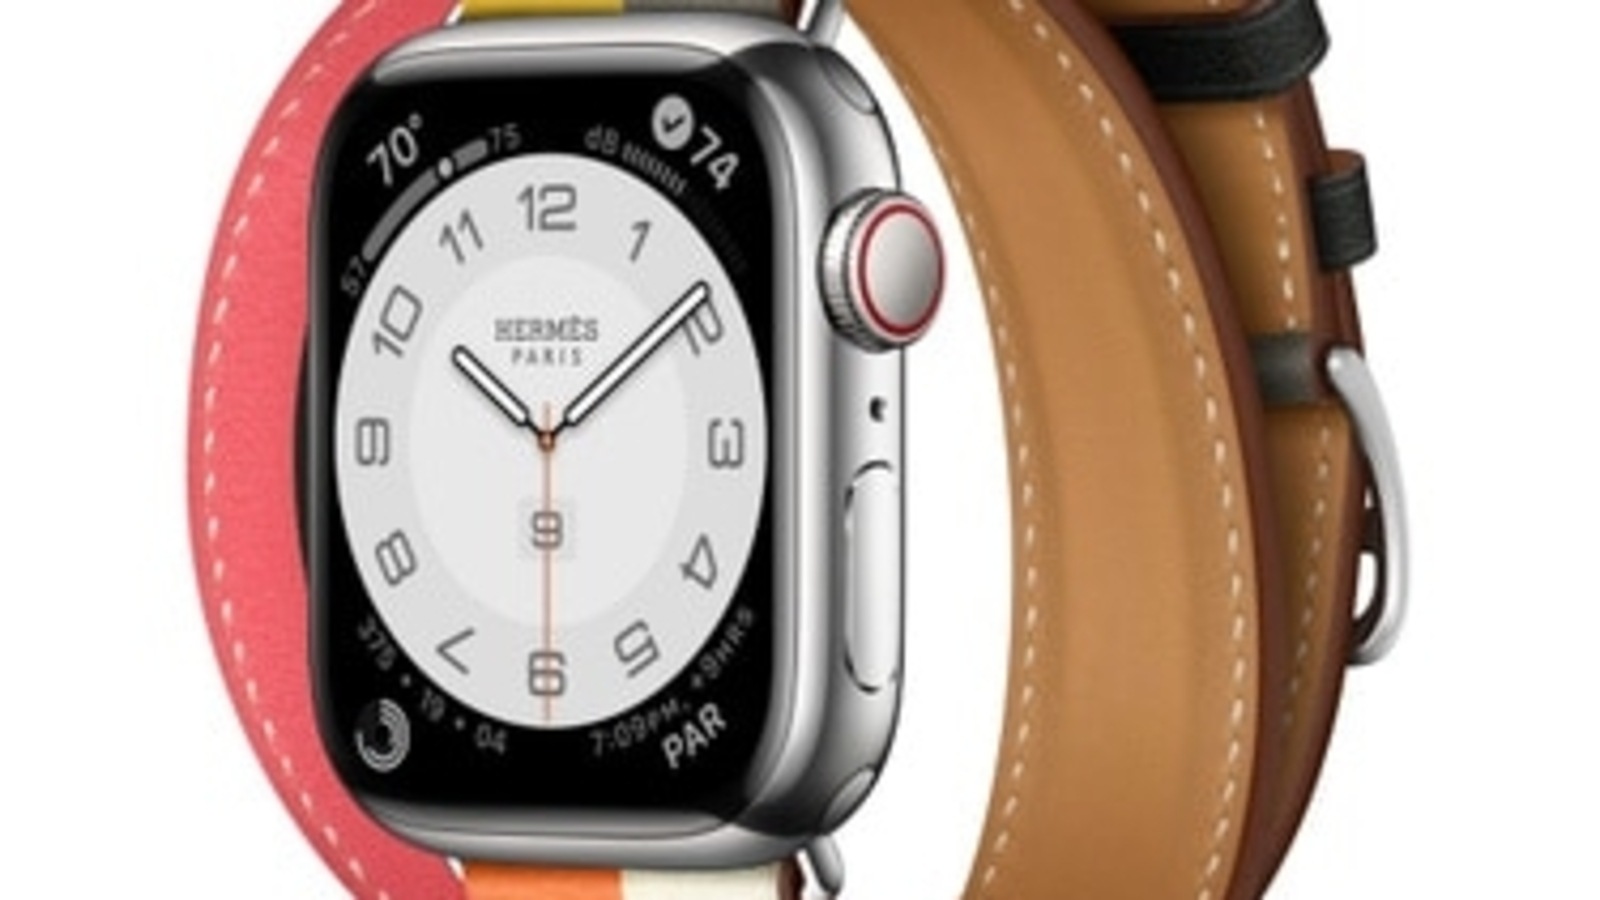 5 jam tangan pintar trendi teratas yang memadukan teknologi dan gaya;  Apple Watch Hermes, Fossil Gen 5 Carlyle, lainnya